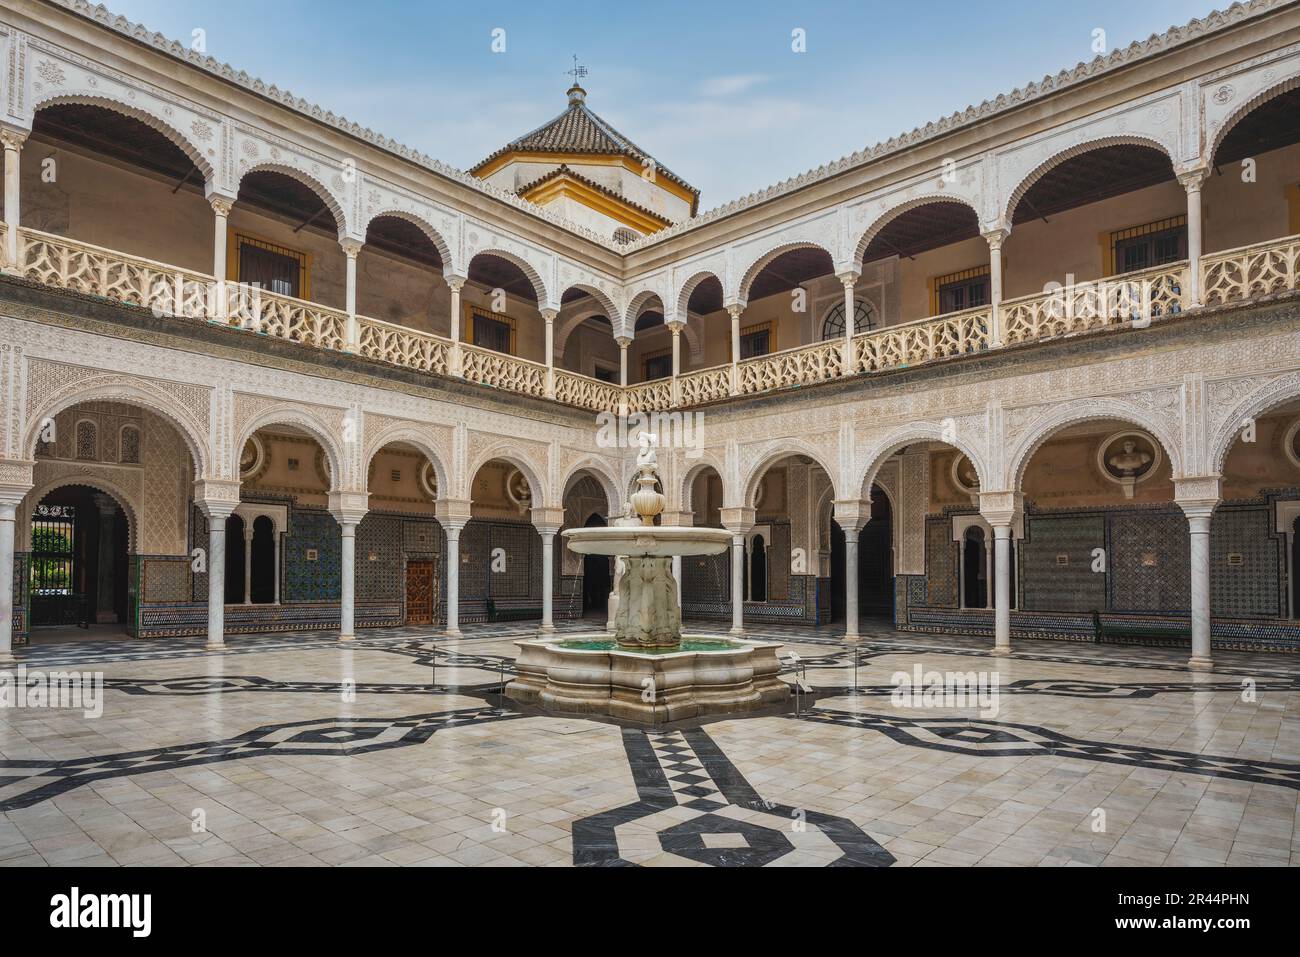 Main Courtyard (Patio Principal) at Casa de Pilatos (Pilates House) Palace Interior - Seville, Andalusia, Spain Stock Photo